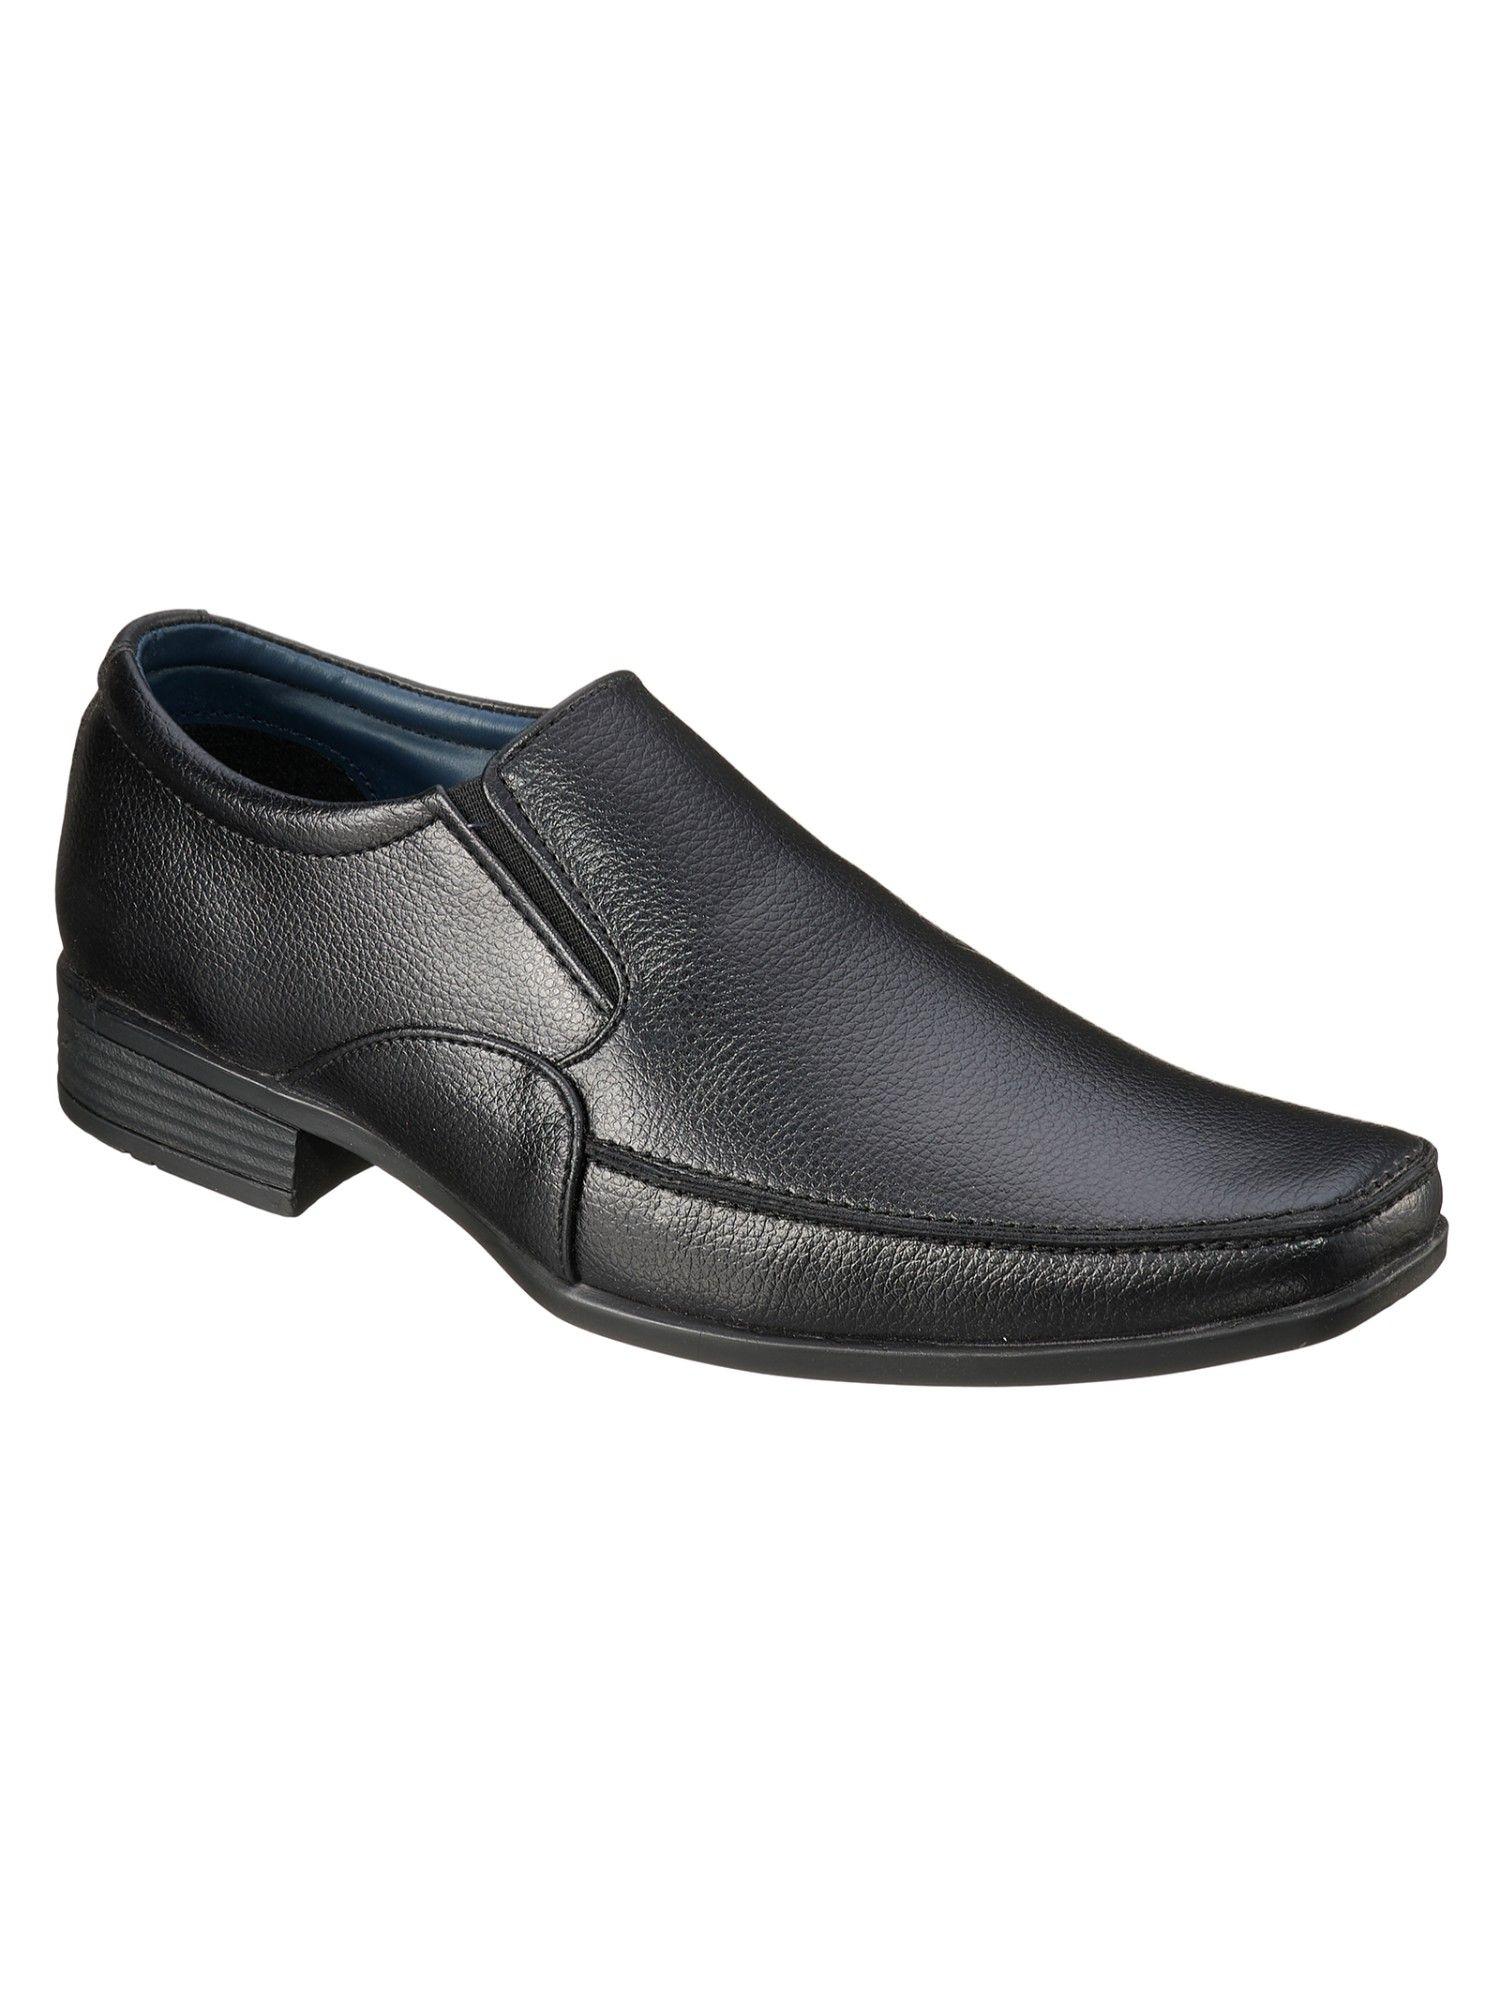 solid/plain black formal shoes